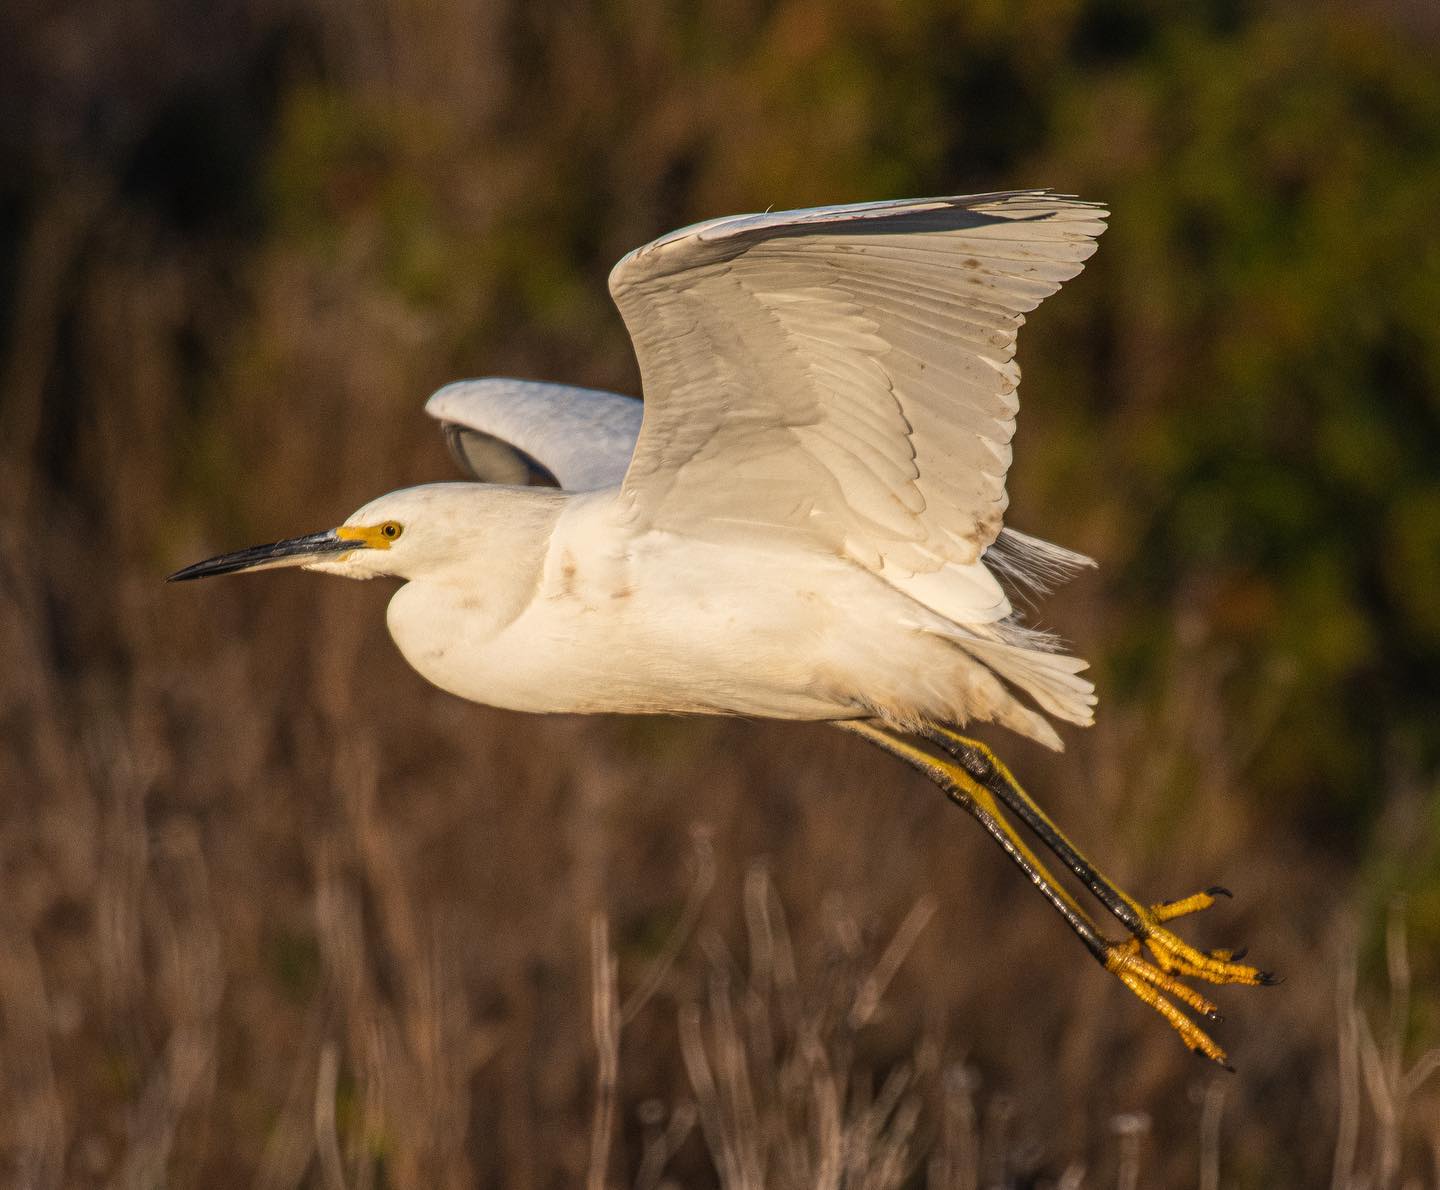 A snowy egret takes flight Sunday morning at Radke Shoreline.